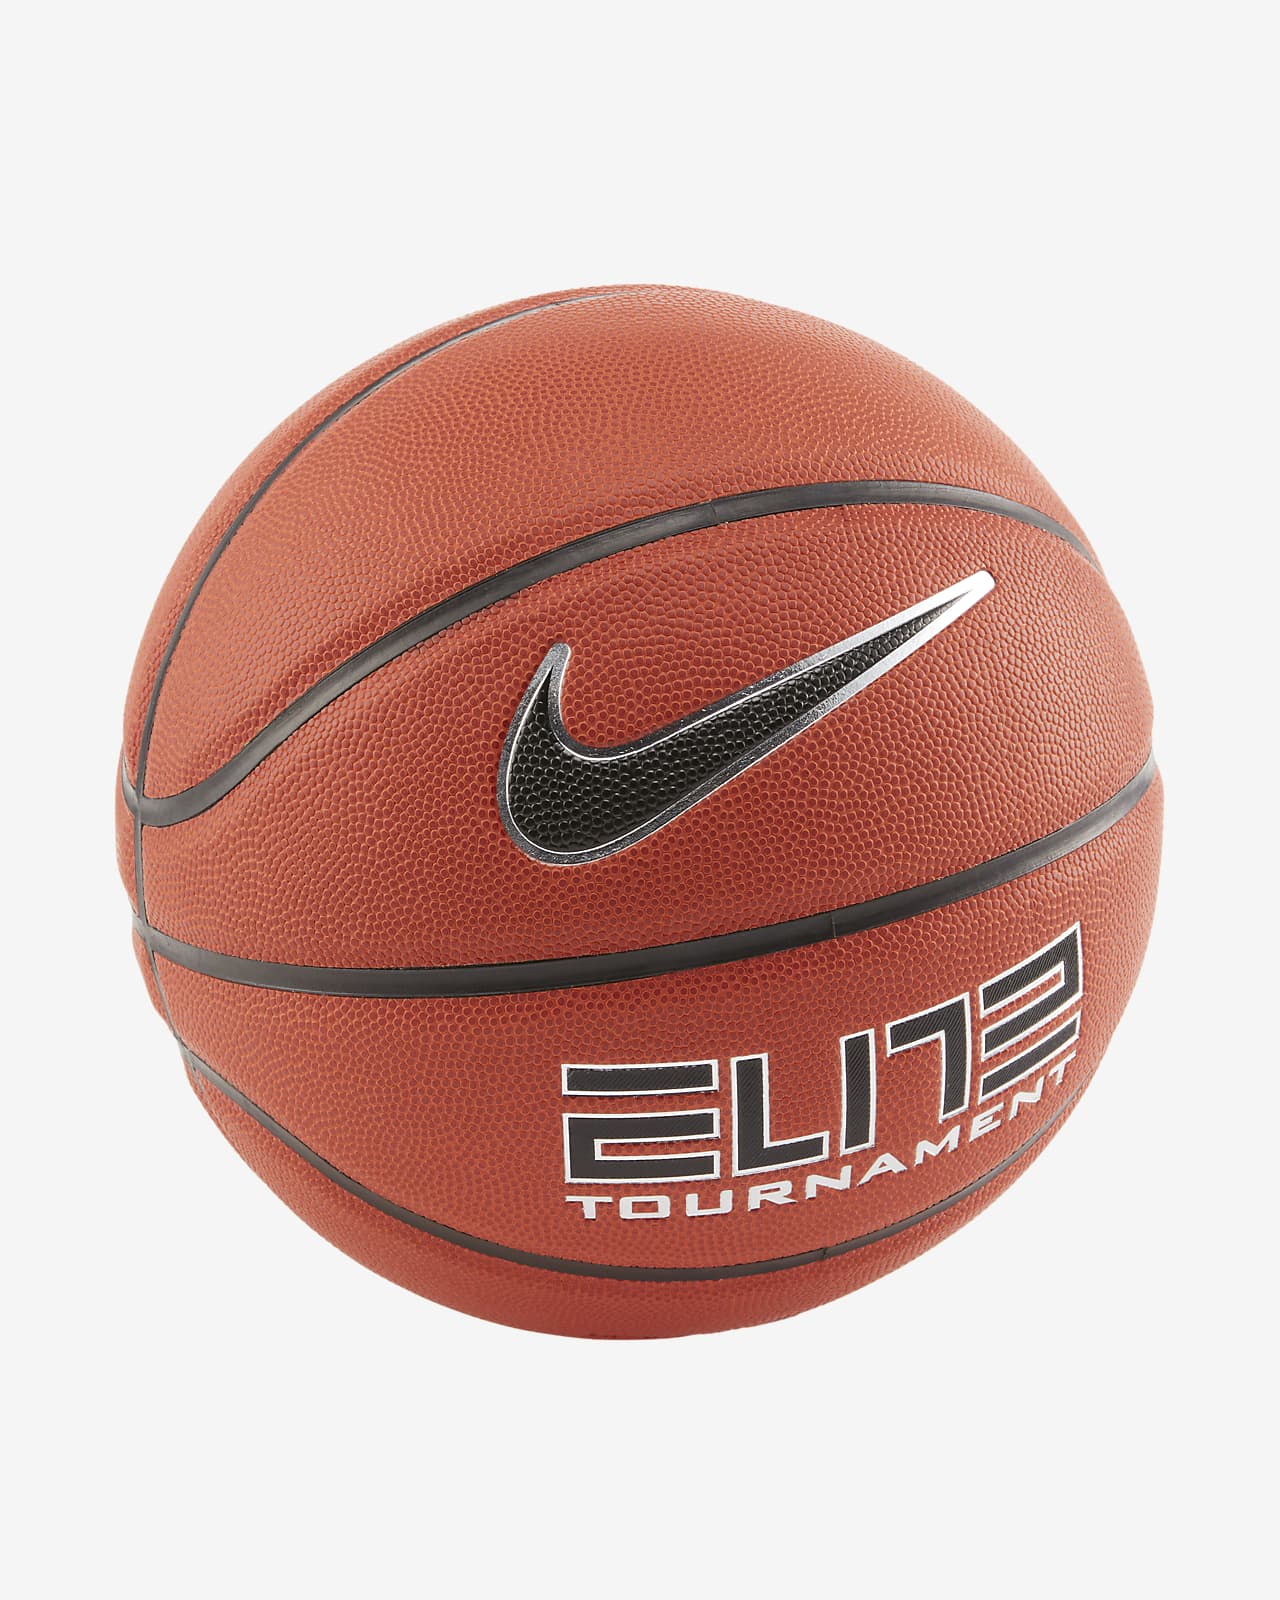 Nike Elite Tournament Basketball (Size 6 and 7)